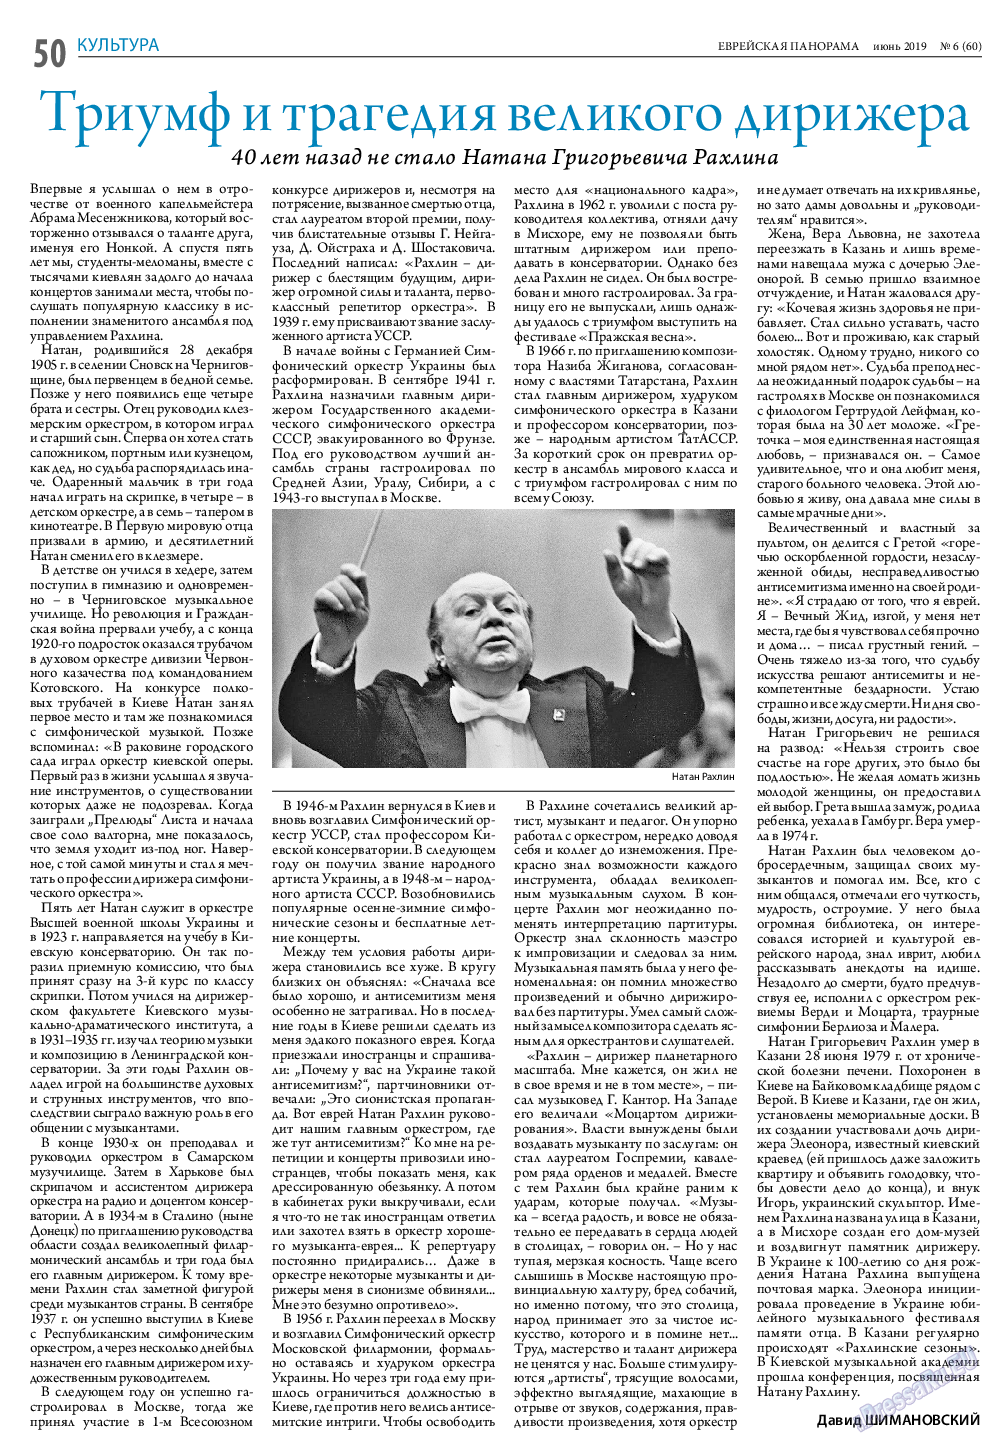 Еврейская панорама, газета. 2019 №6 стр.50